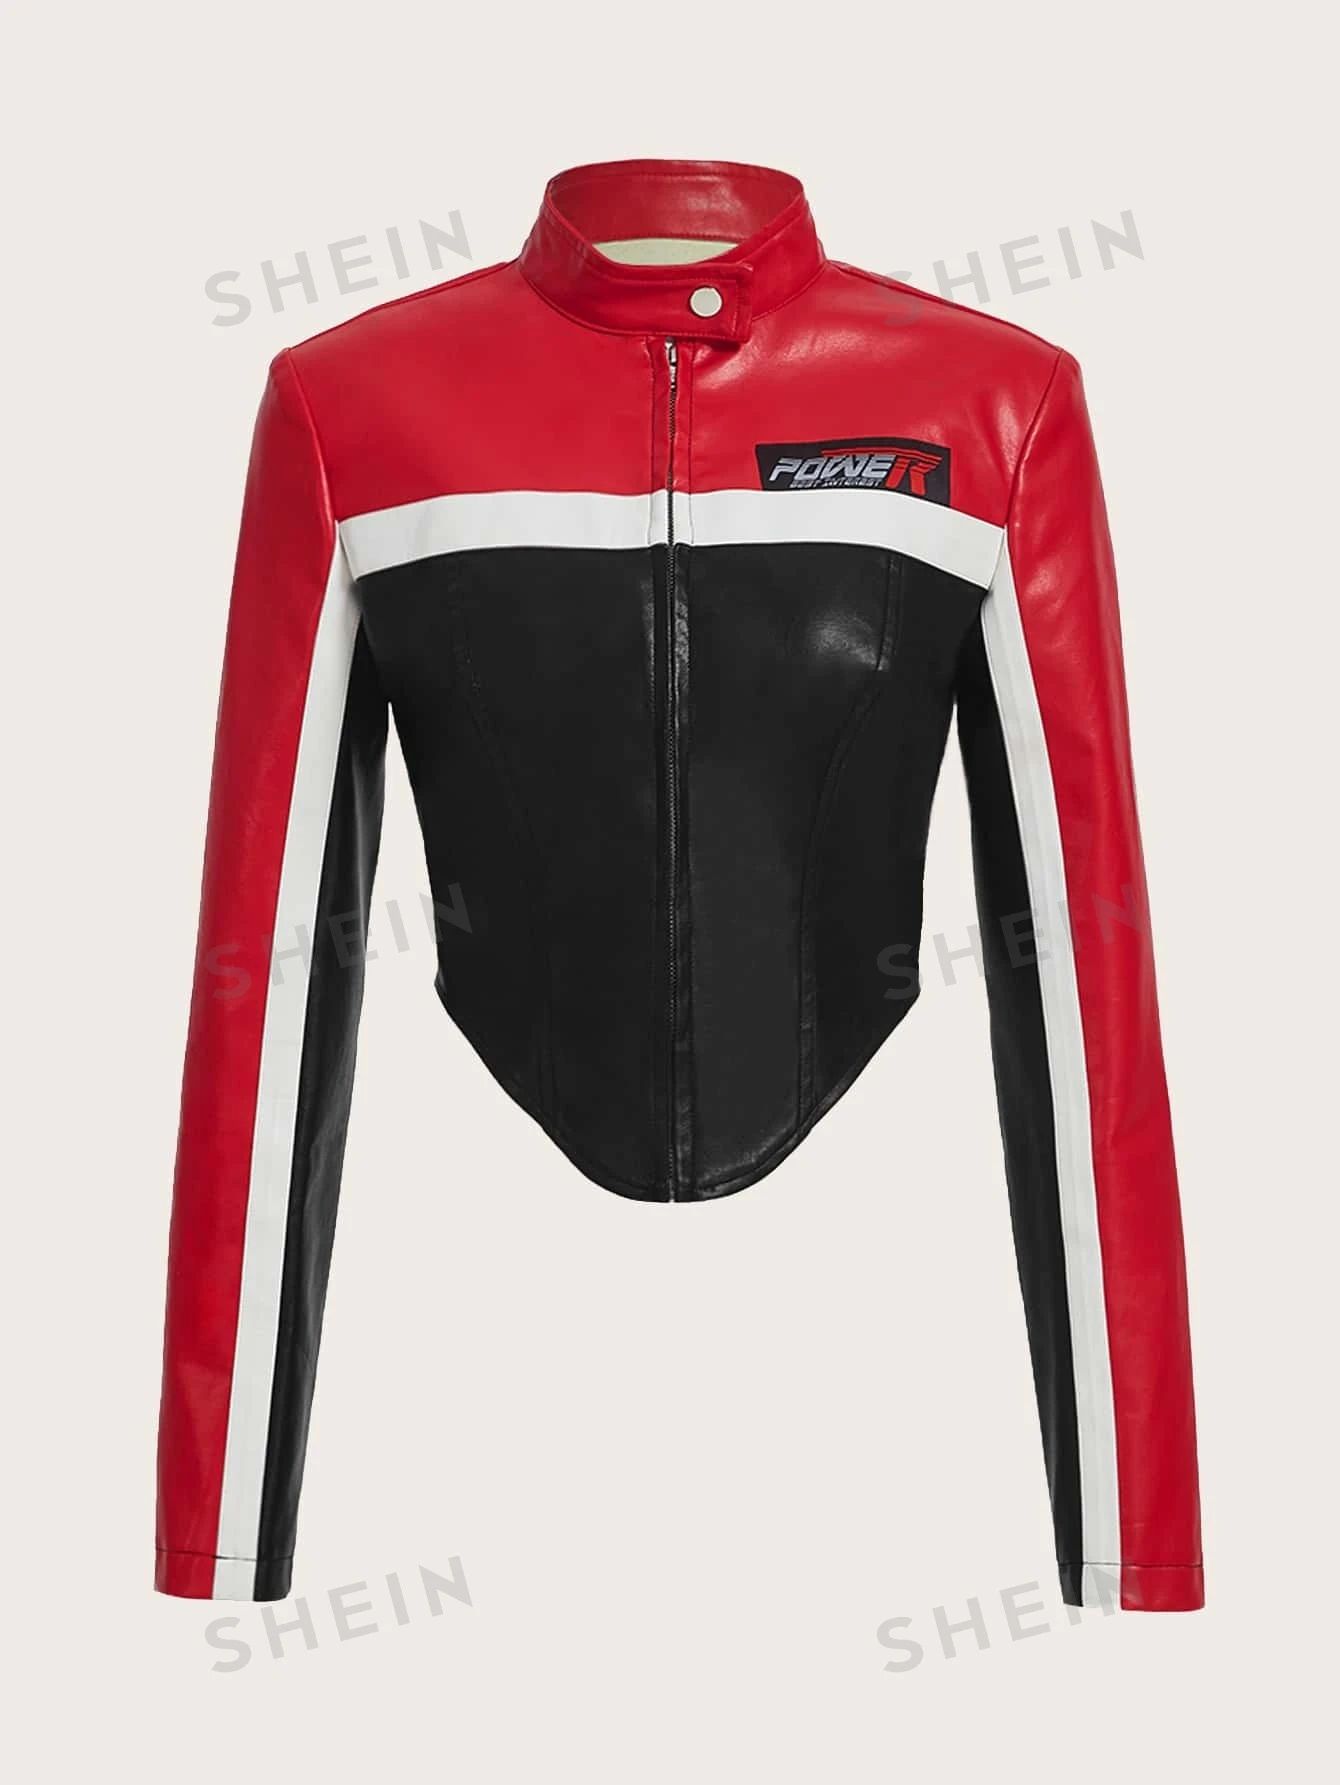 SHEIN ICON Bikercore Colorblock Zip Up PU Leather Y2k Jacket | SHEIN